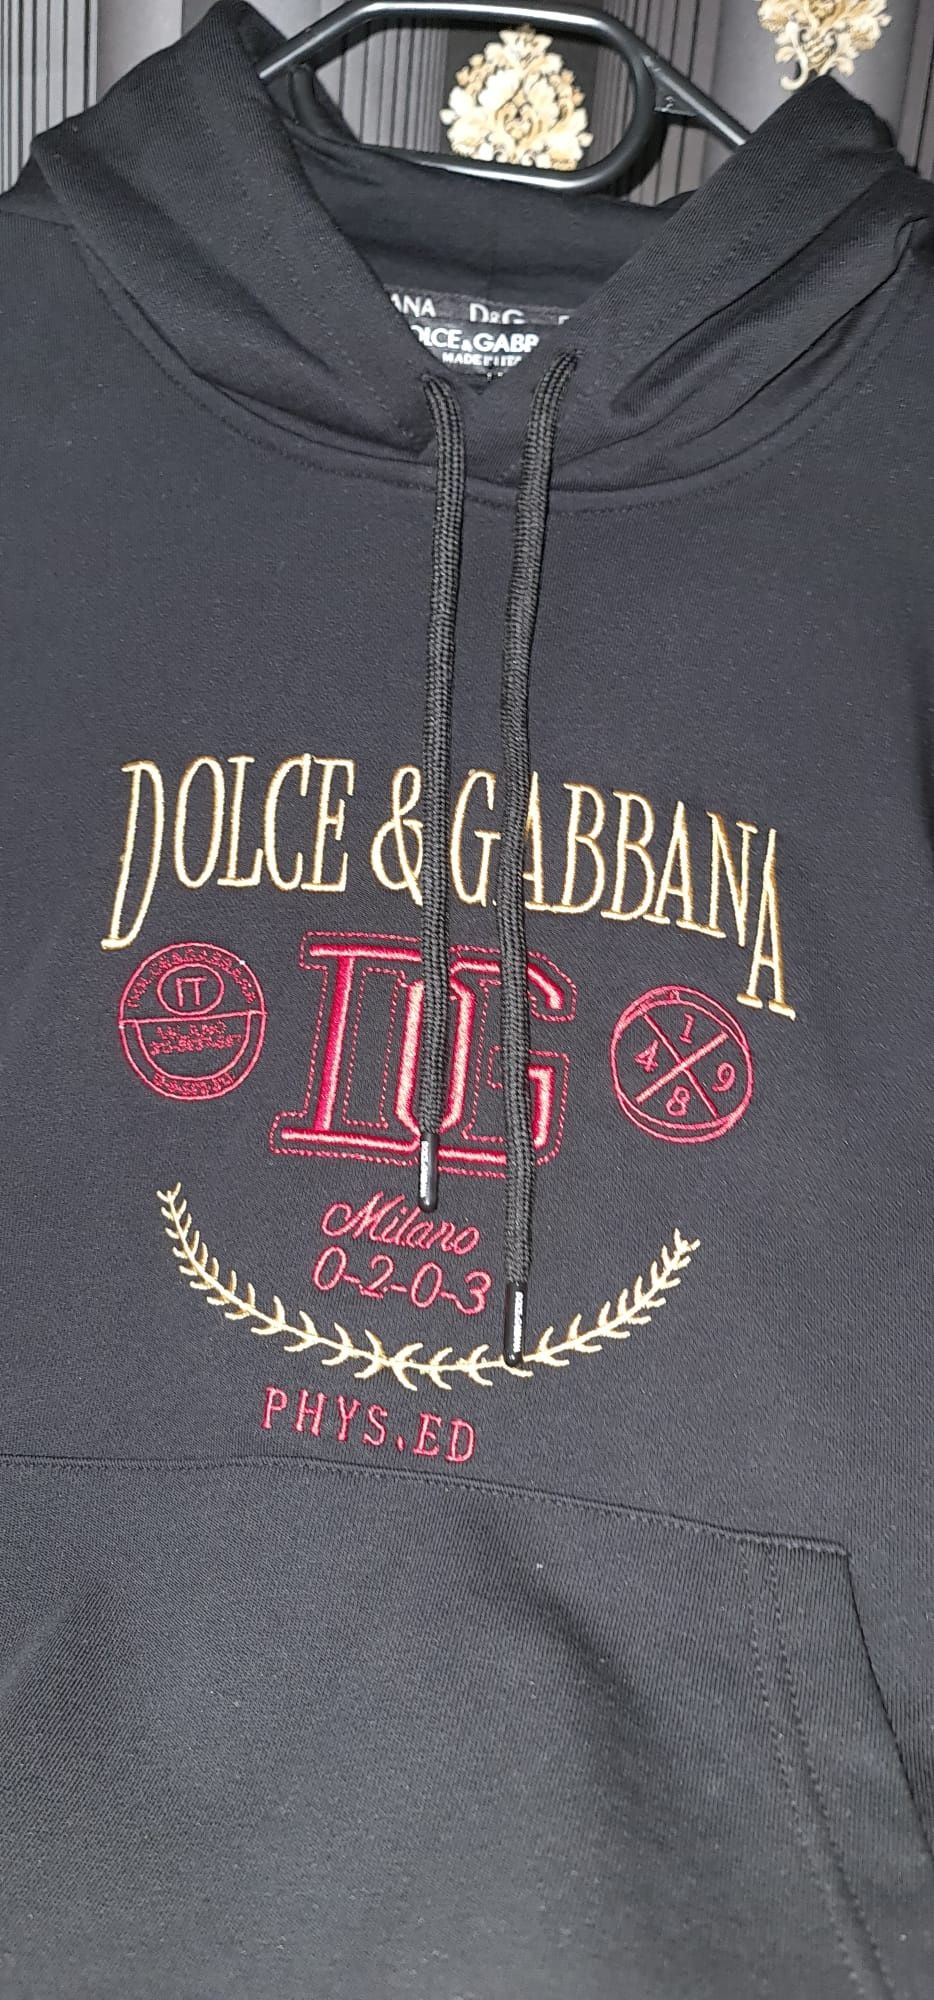 Hanorac Dolce&Gabbana reducere